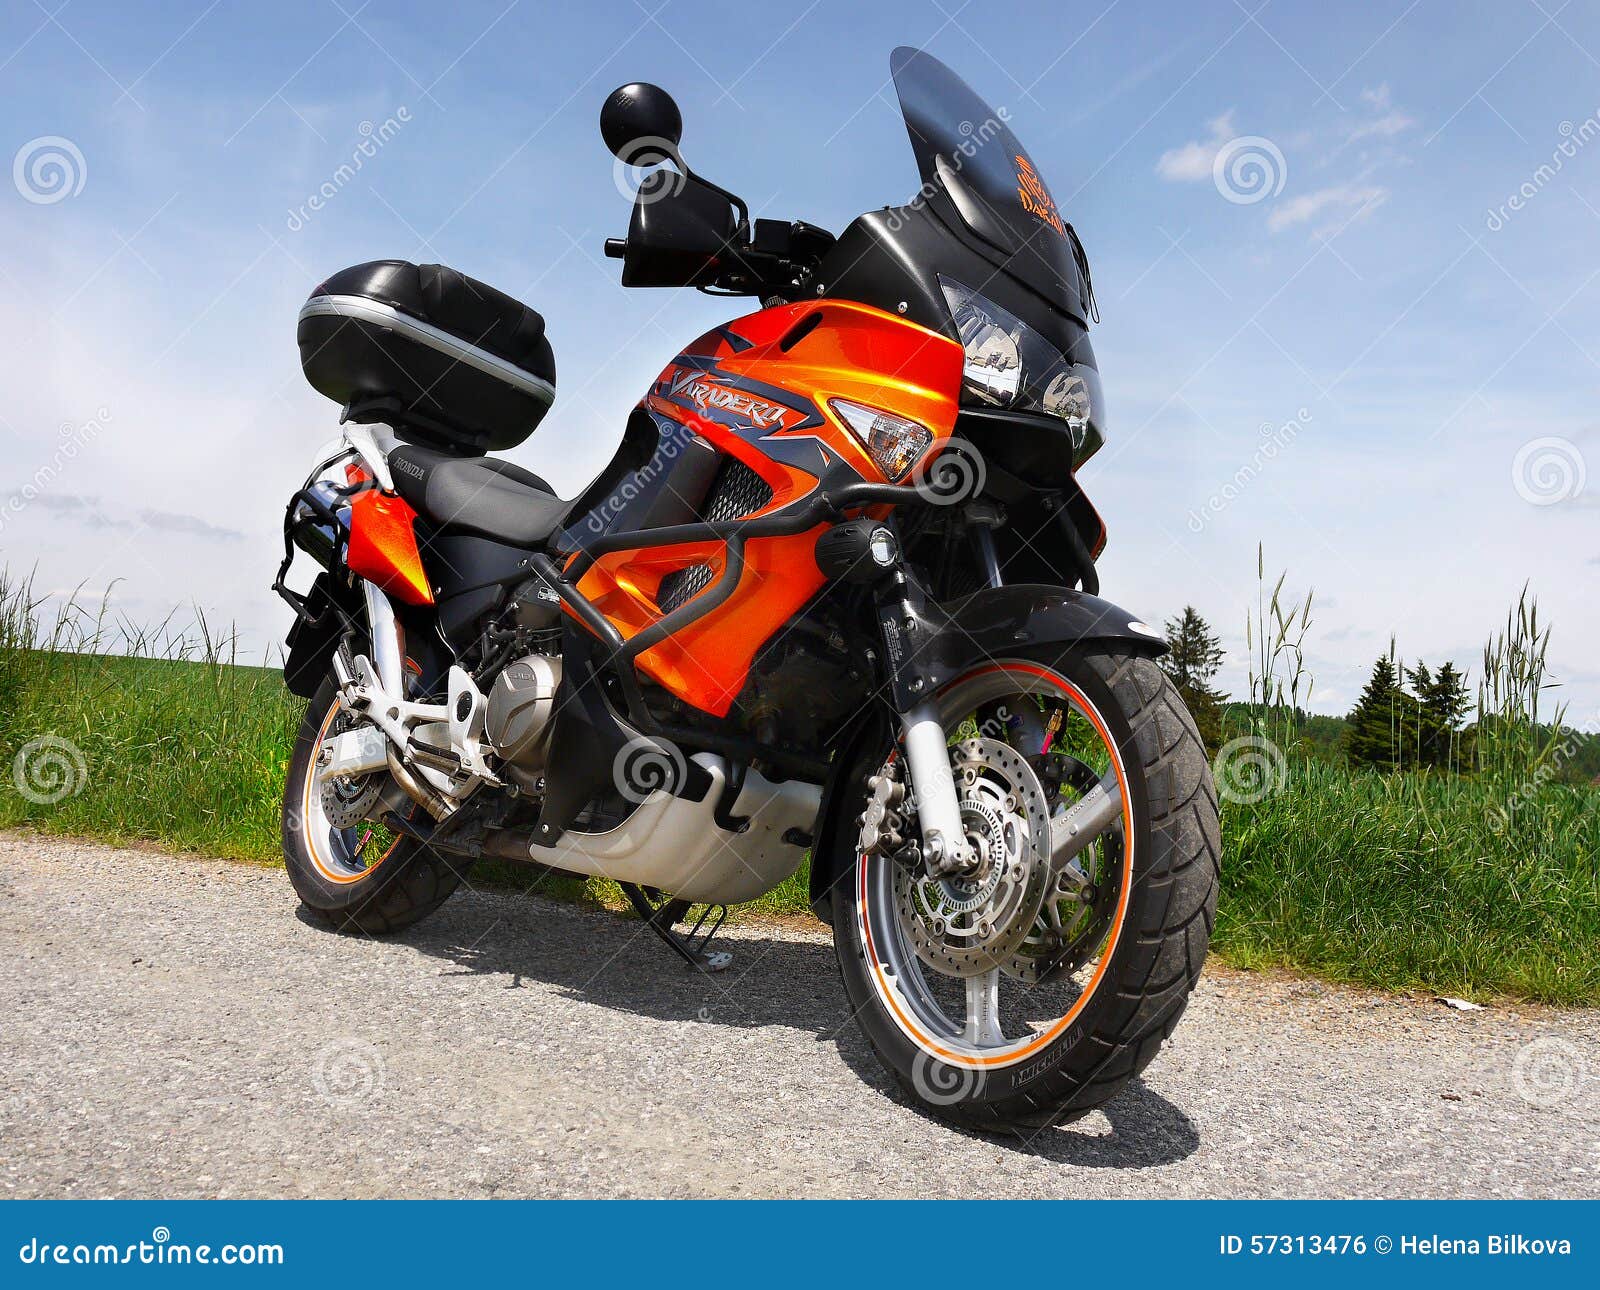 26+ Dual Sport Motorcycle Honda